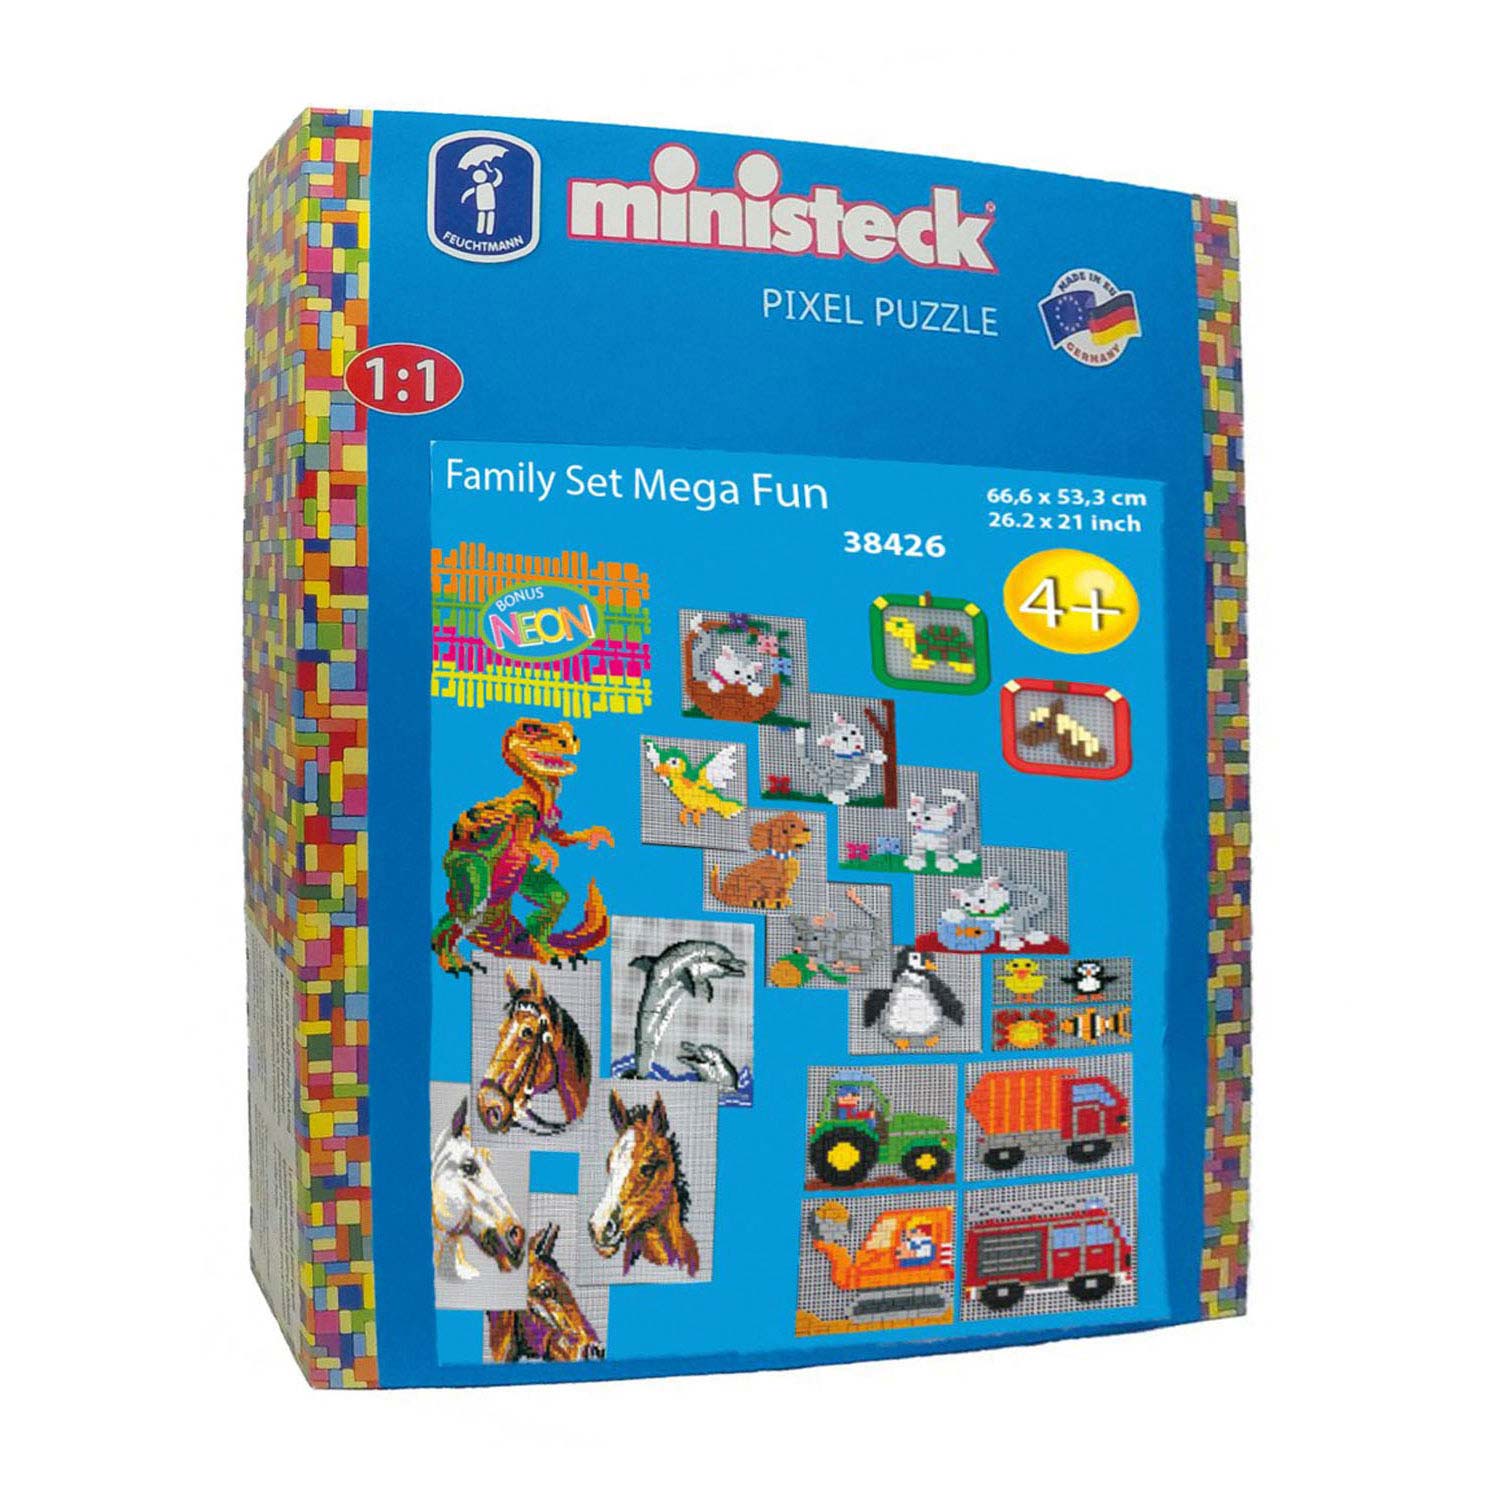 Bakken Koken Nadruk Ministeck Family Set Mega Fun - XXL Box, 4000pcs. | Thimble Toys